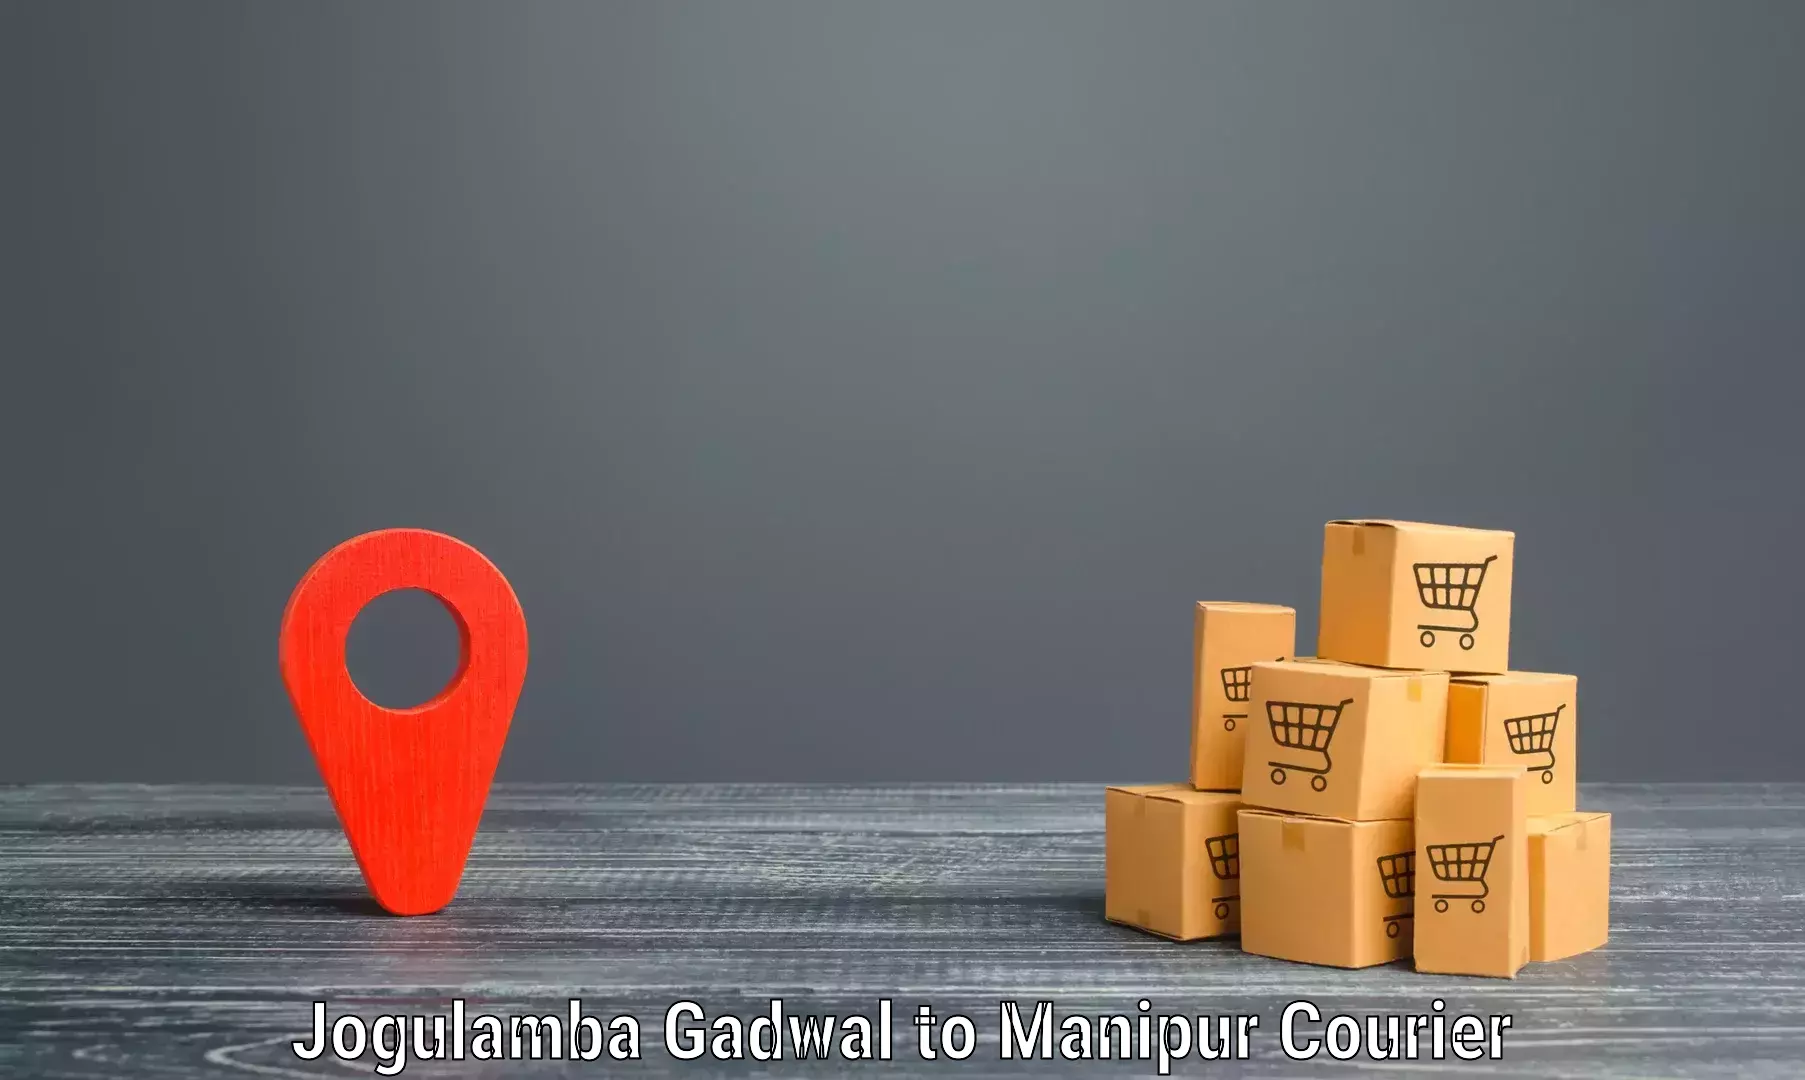 Modern courier technology Jogulamba Gadwal to Manipur